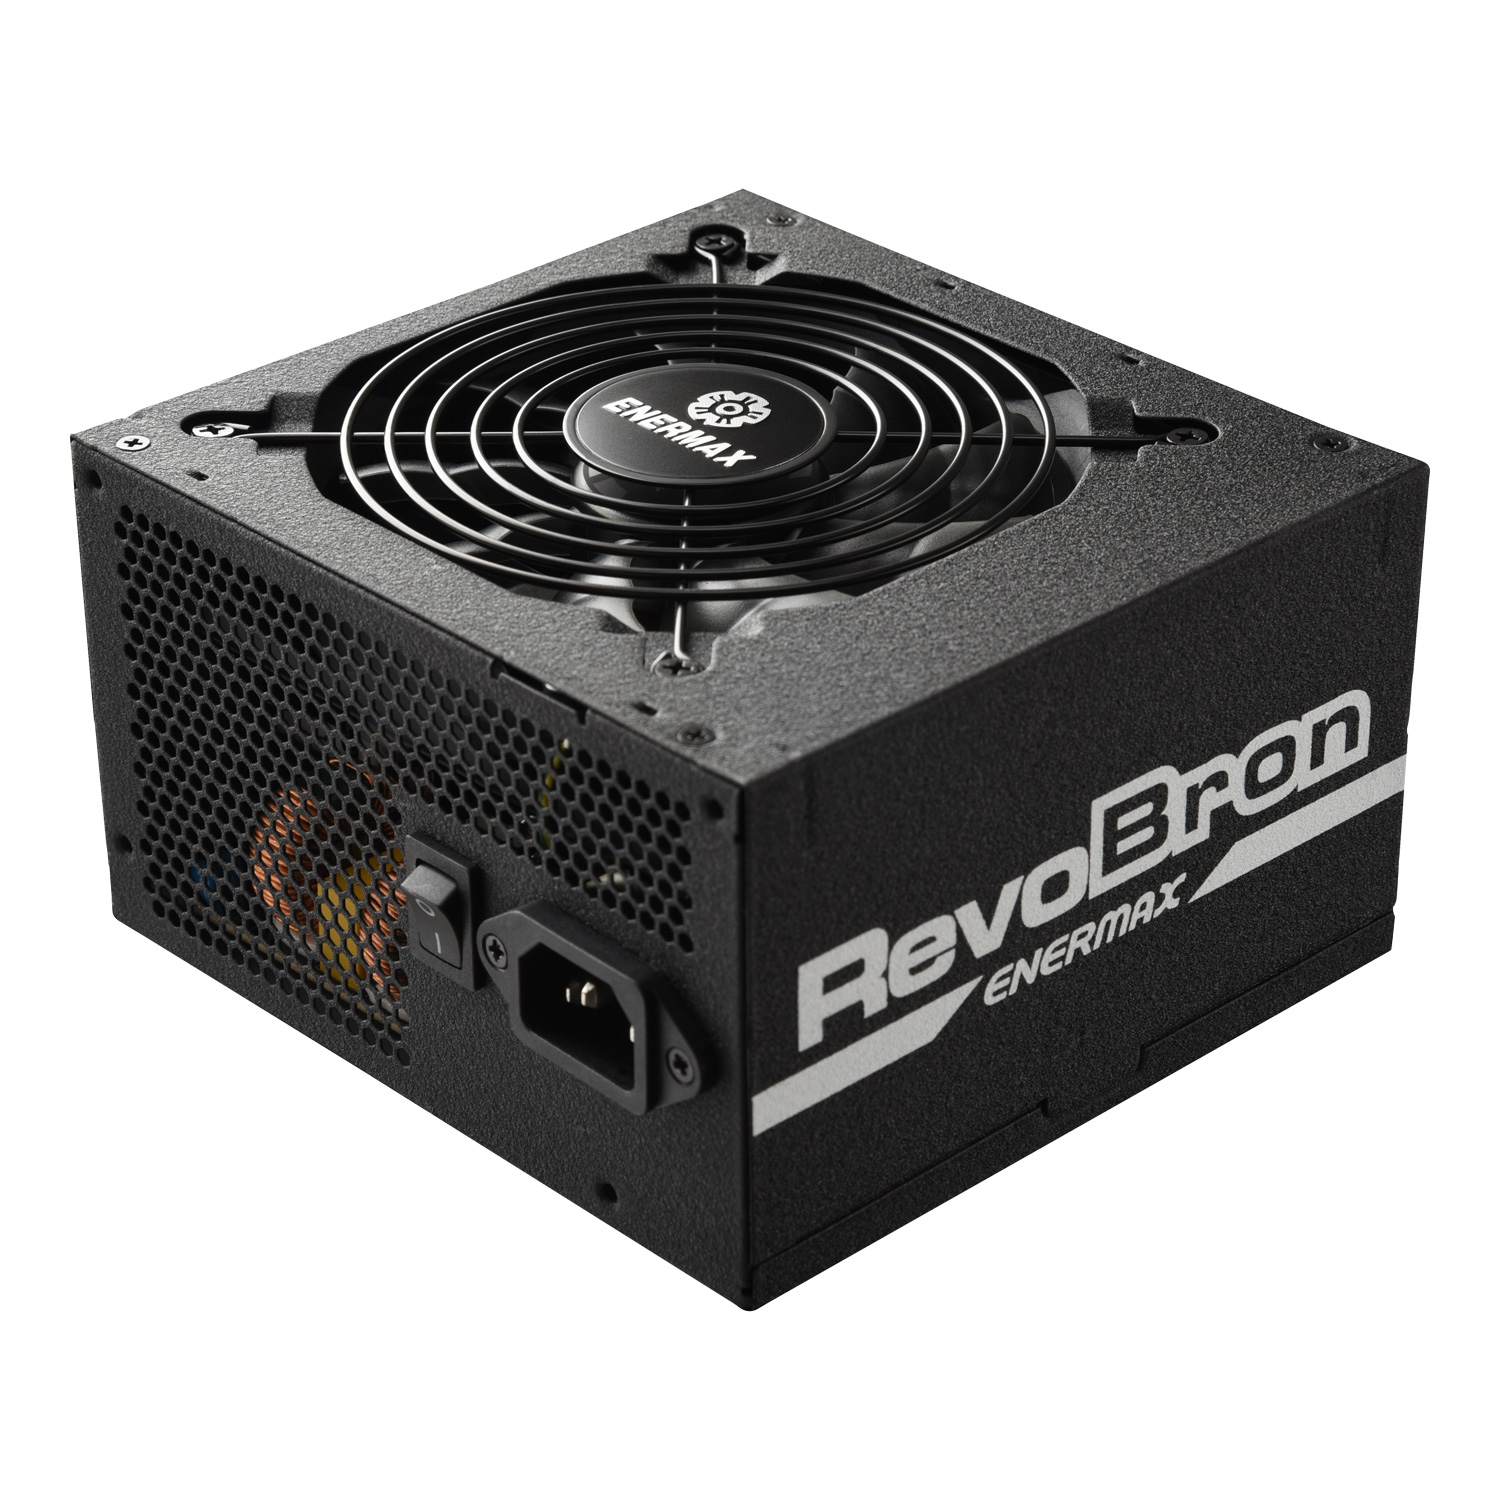 RevoBron 600W